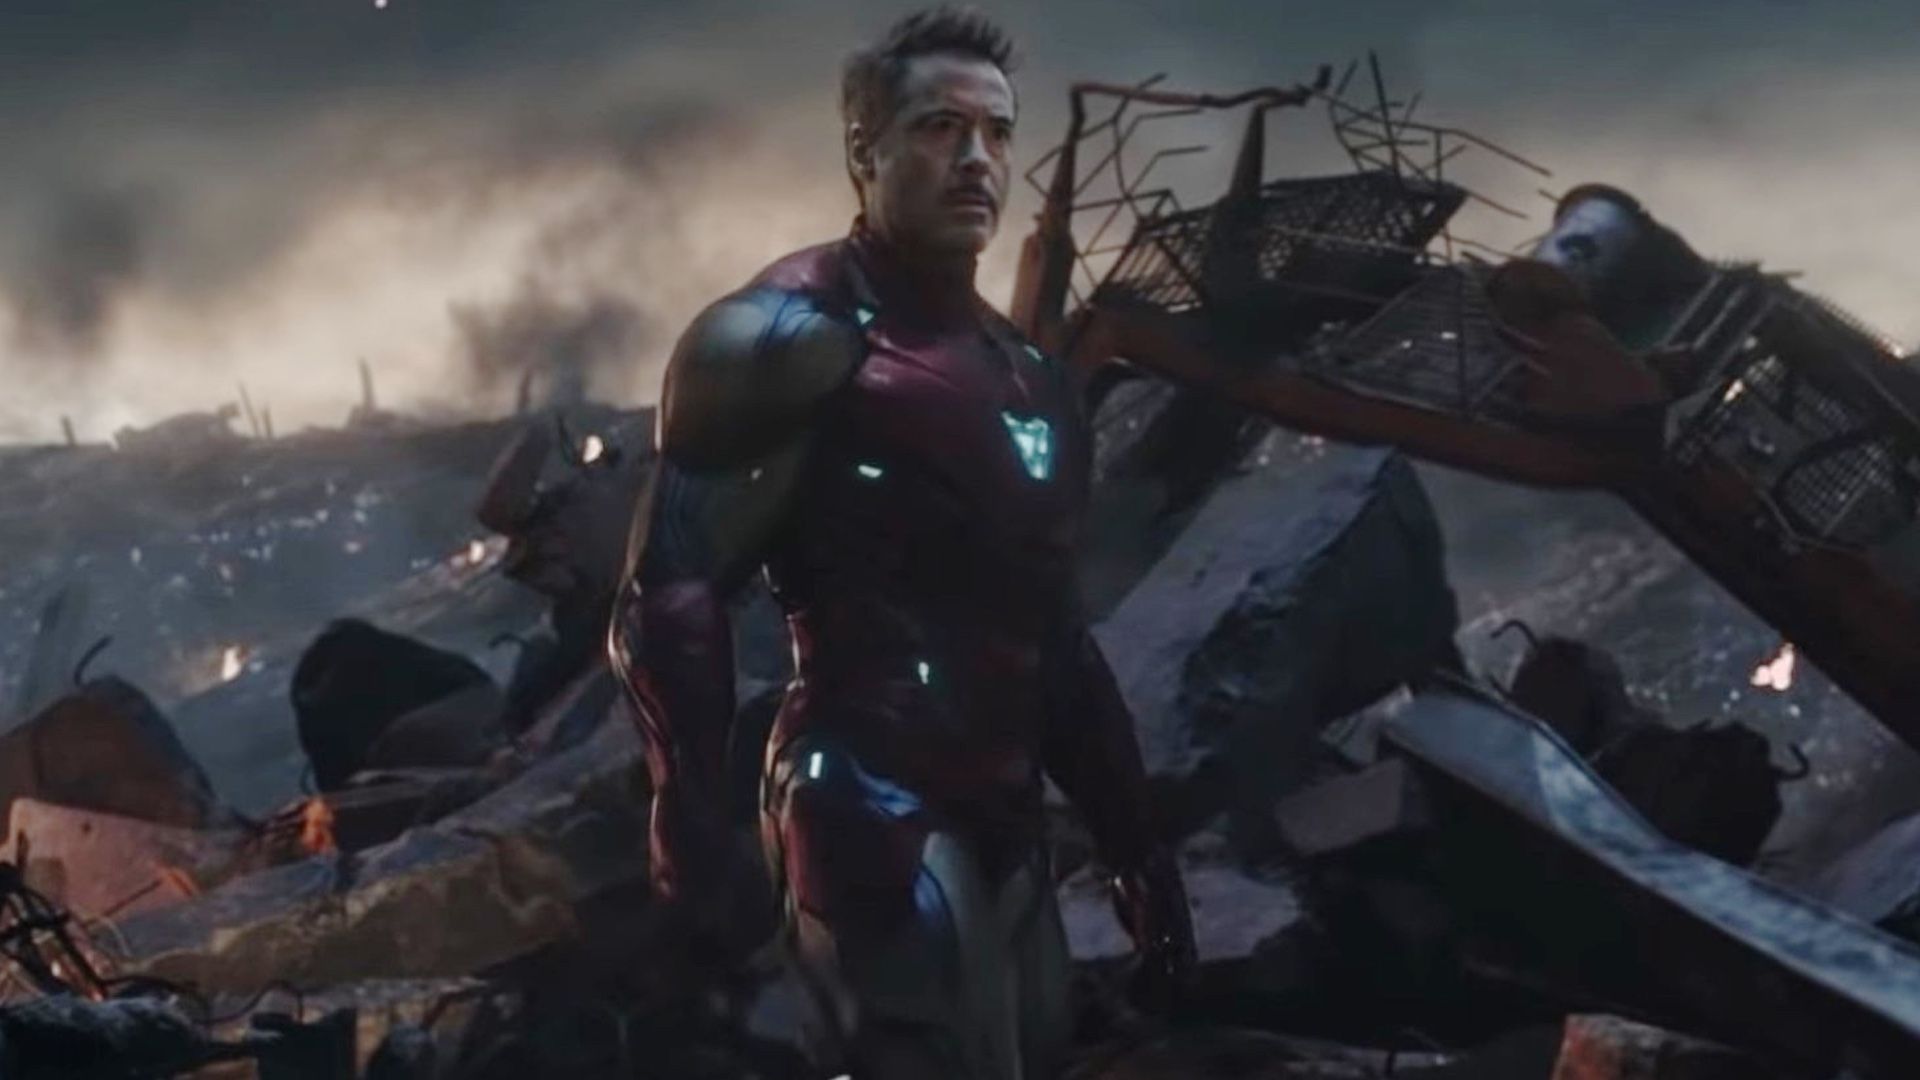 Iron Man Actor, RDJ Shares Emotional BTS Image Of Tony Stark's